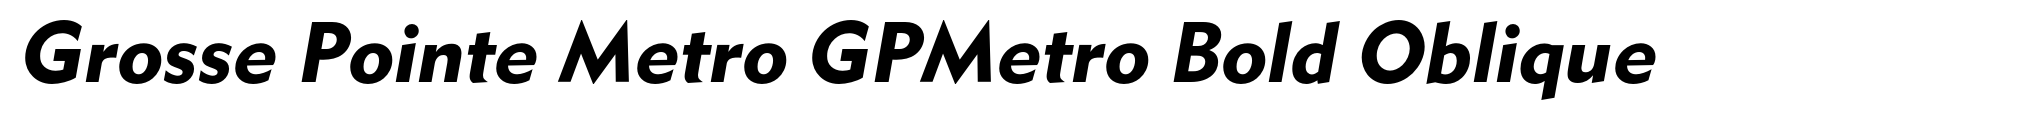 Grosse Pointe Metro GPMetro Bold Oblique image